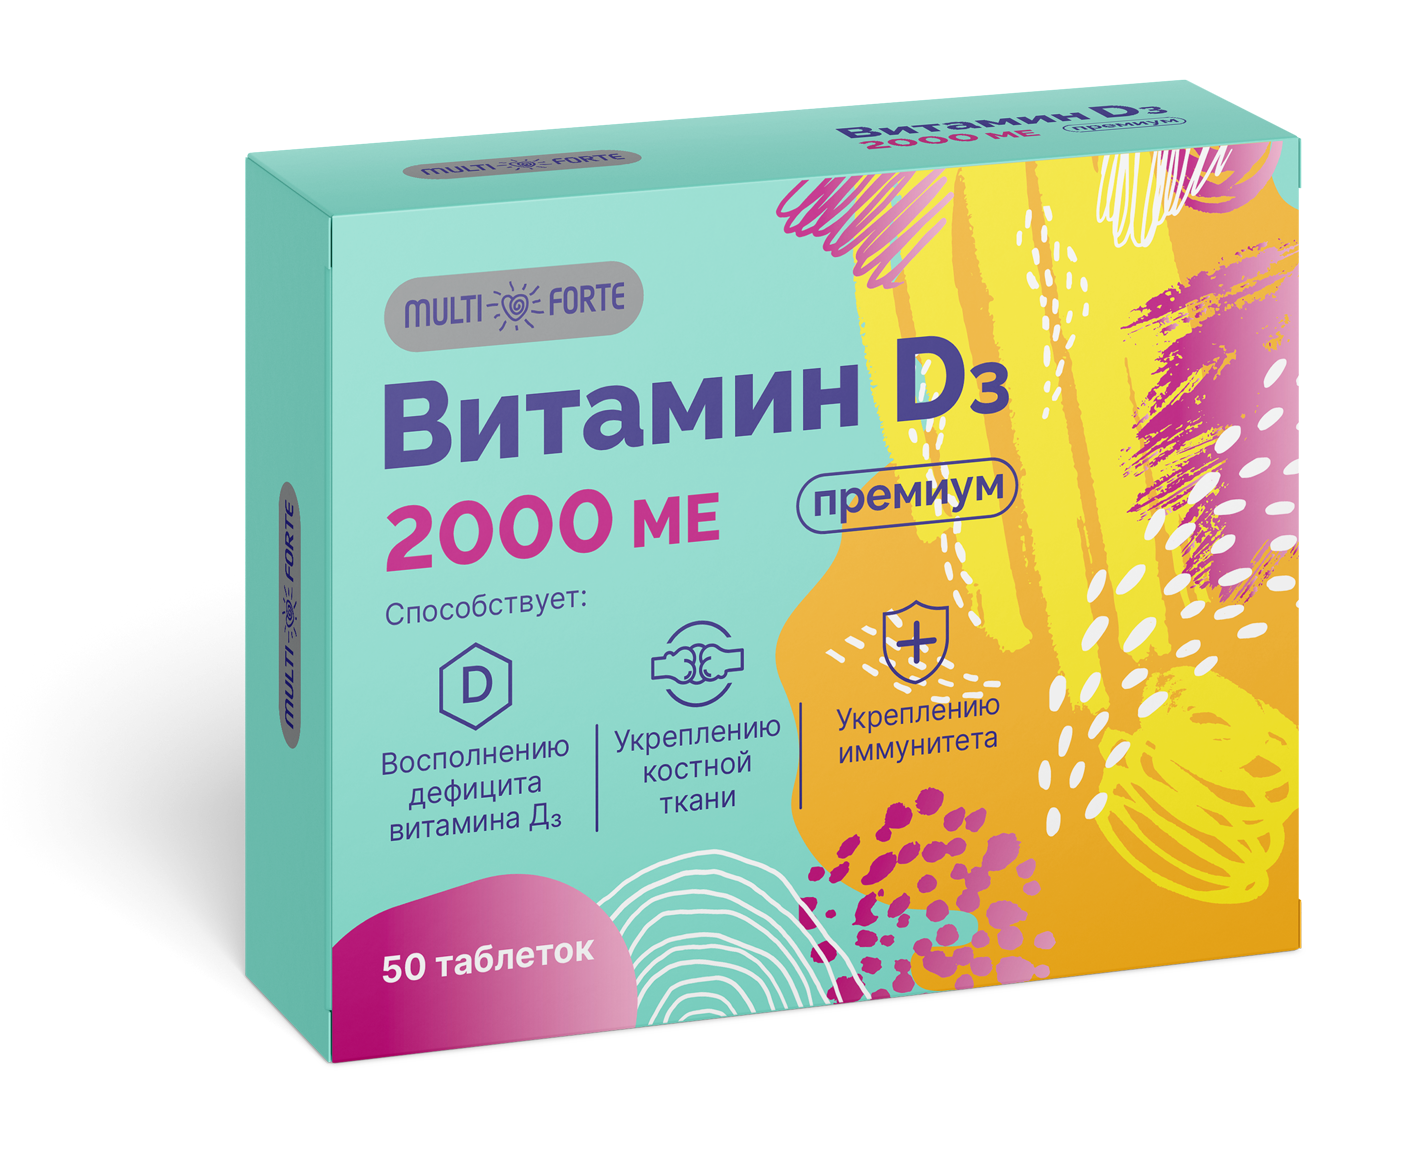 Витамин D3 Премиум MultiForte, таблетки 2000 МЕ, 50 шт. electrolux конвектор электрический ech as 2000 mr 1 0